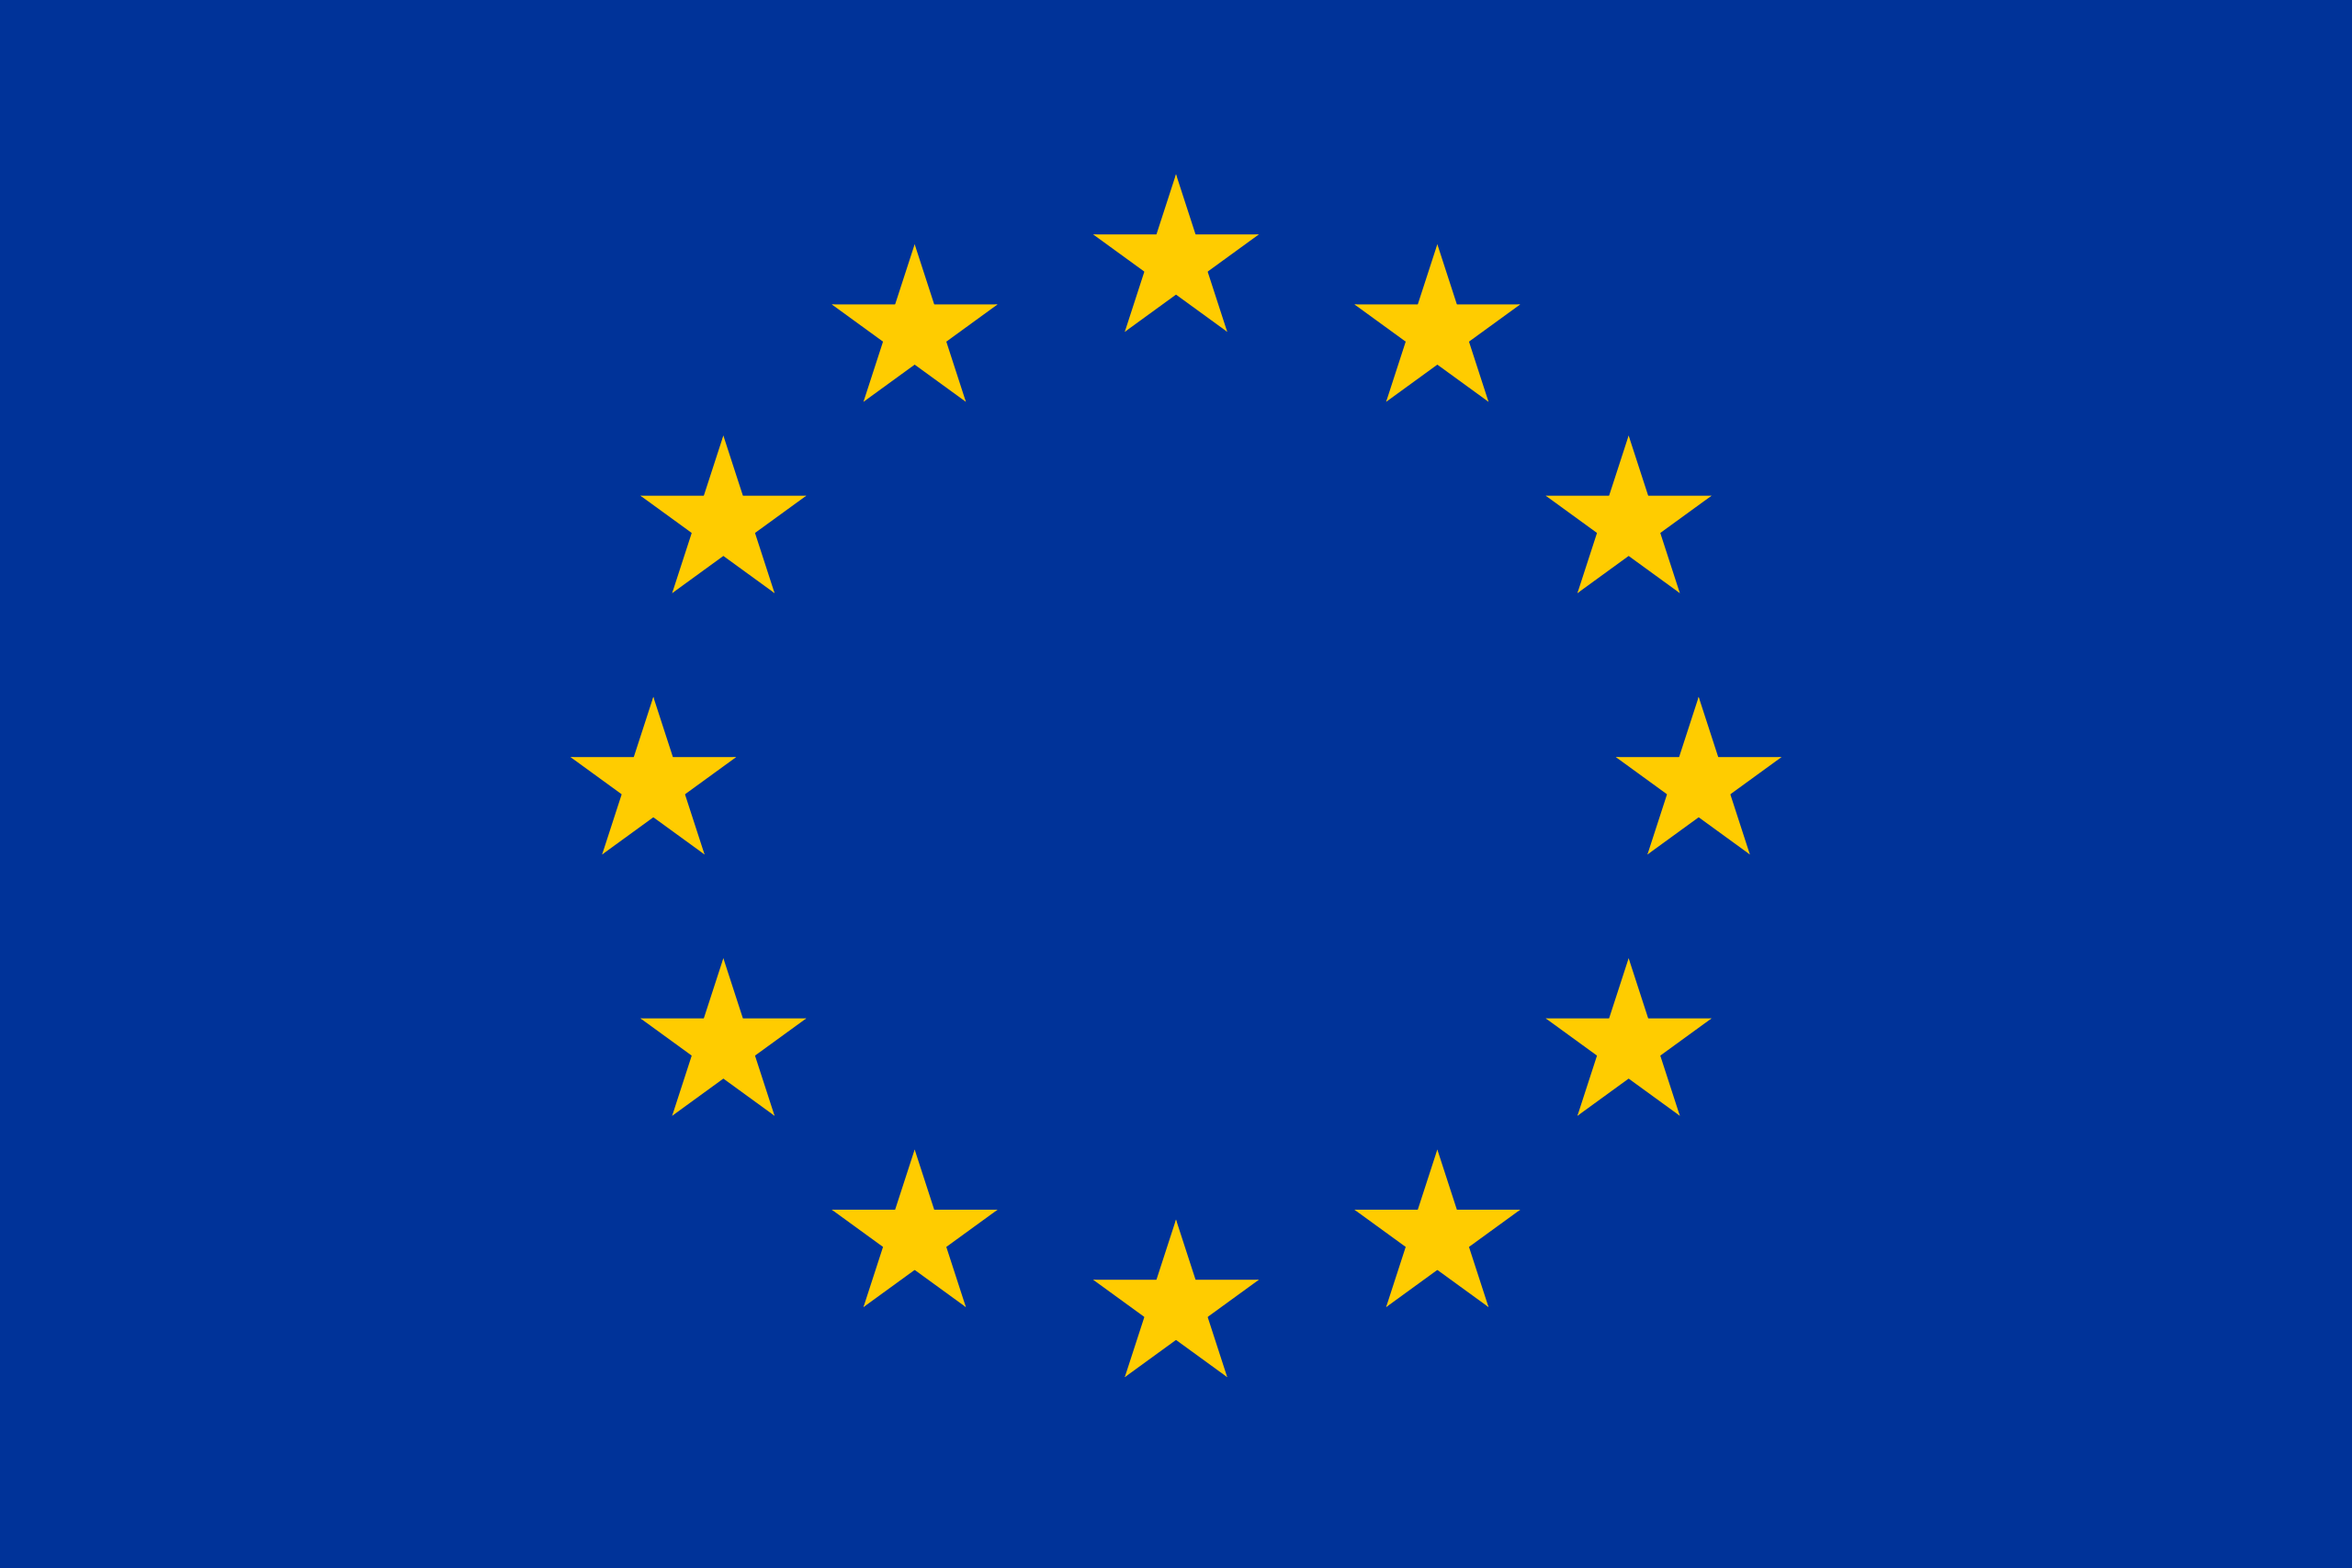 File:EU flag.png